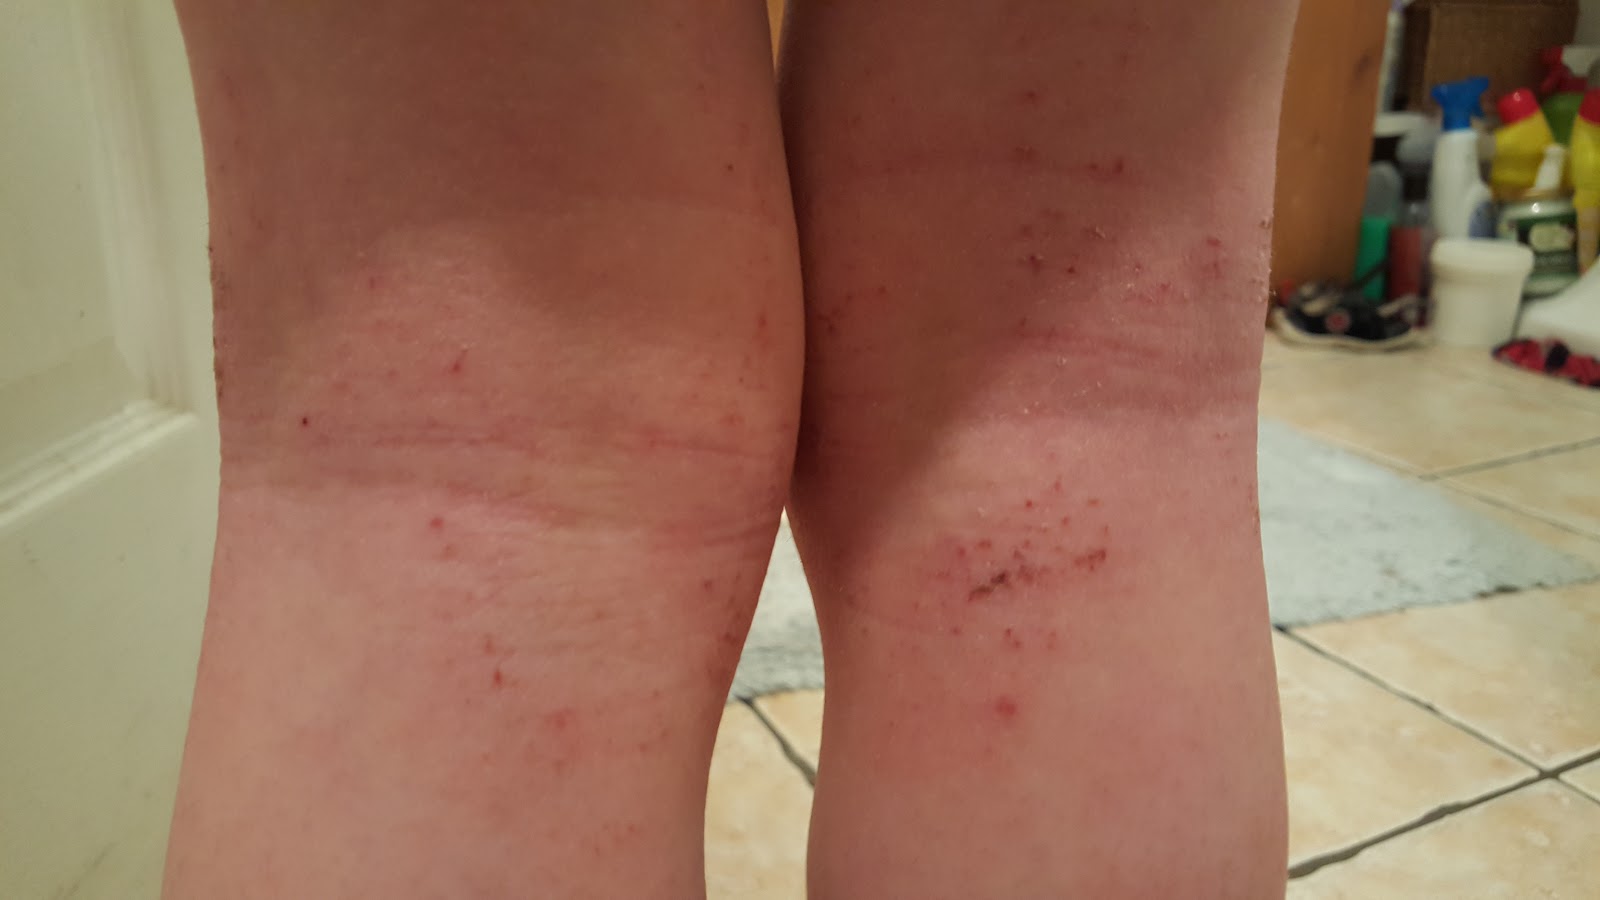 Eczema Behind Knees